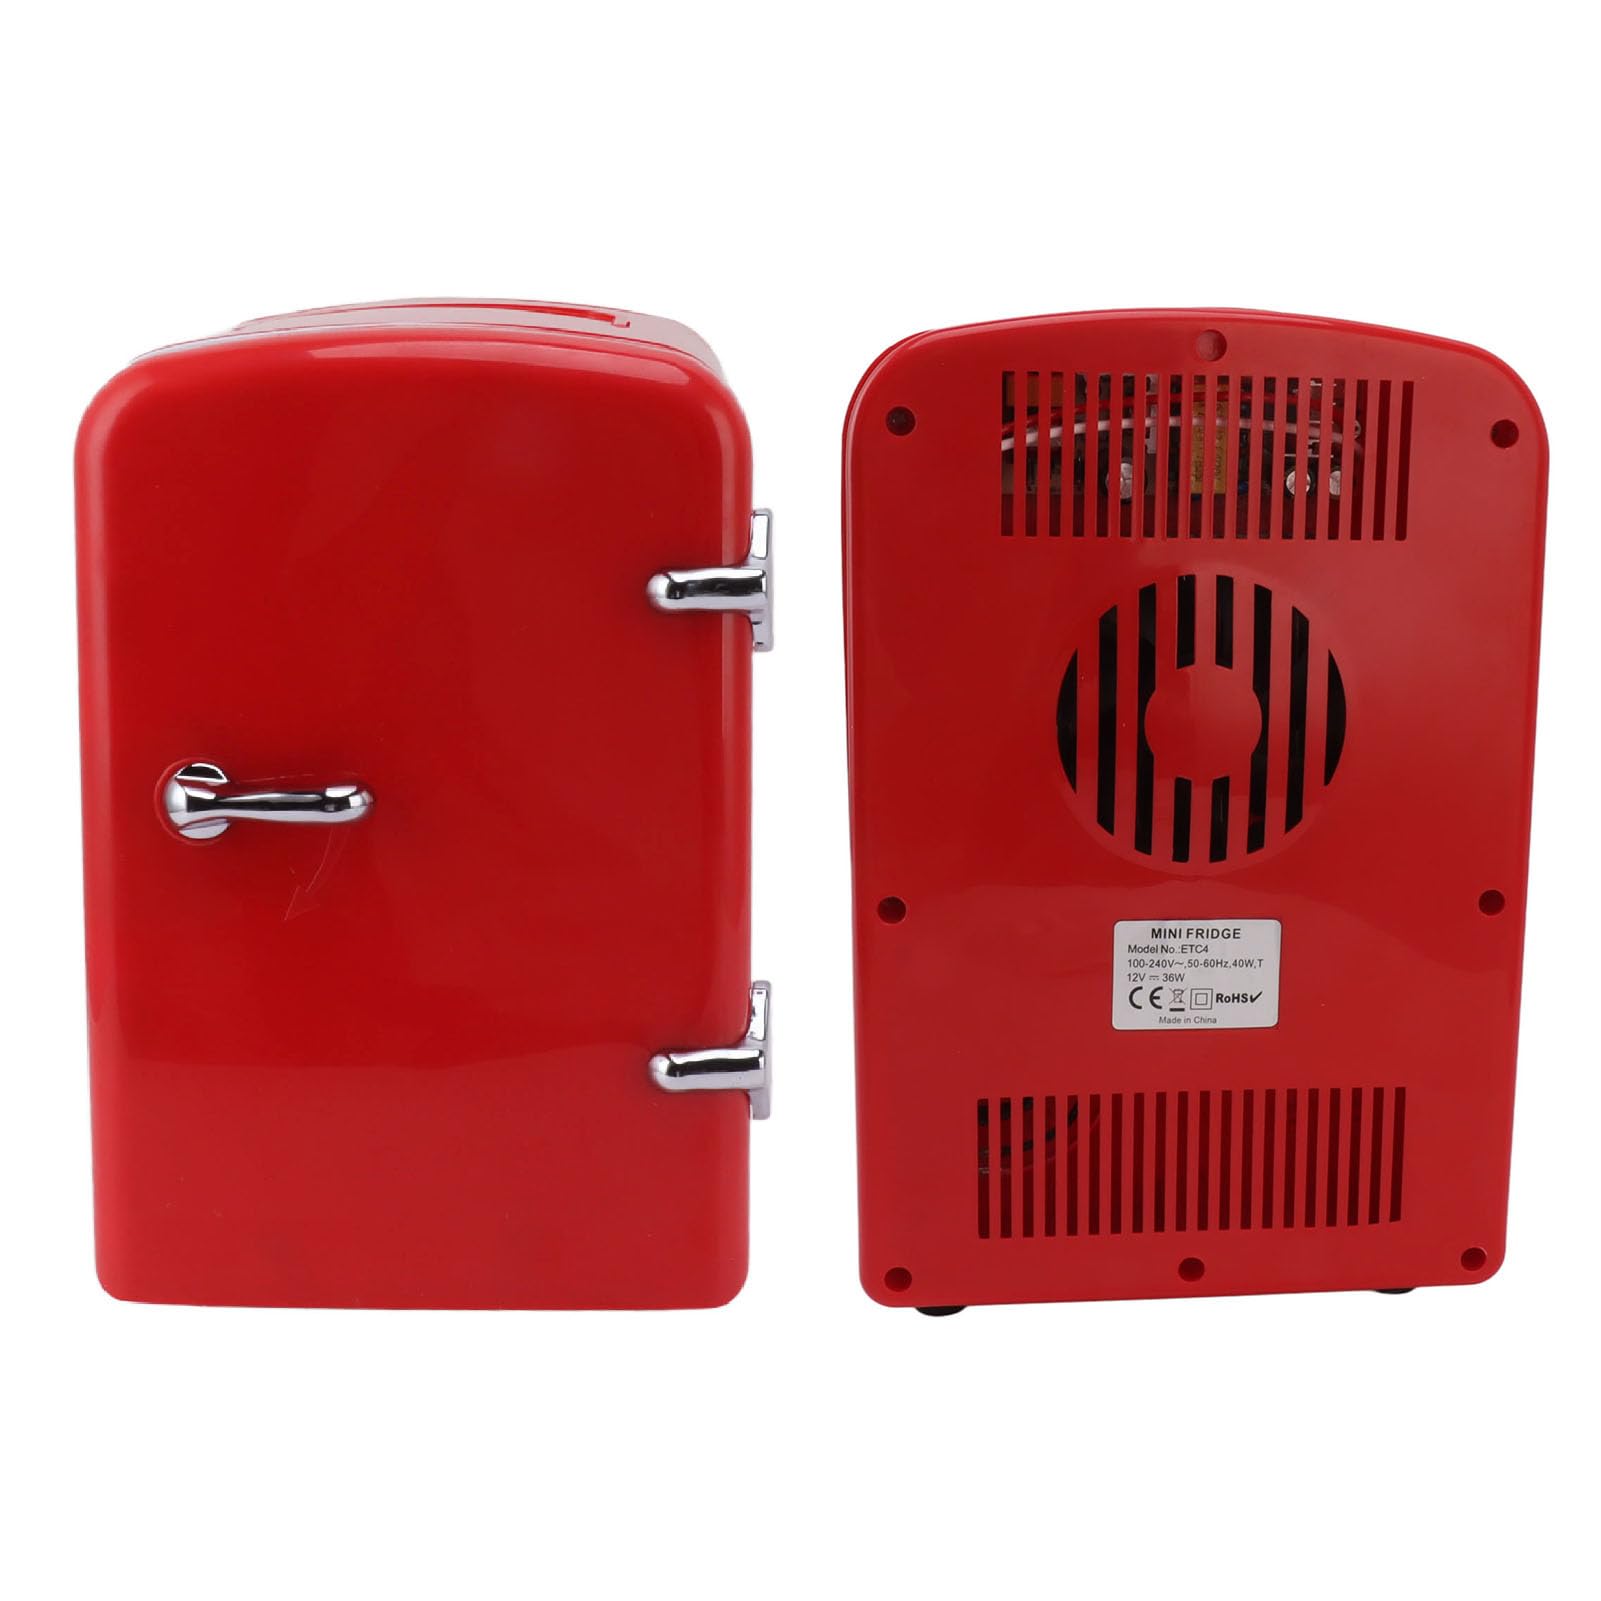 TOPINCN Portable Mini Fridge Cooler, 4 Liter Capacity Personal Travel Refrigerator for Snacks Lunch Drinks Cosmetics, Desk Home Office Dorm (US Plug)